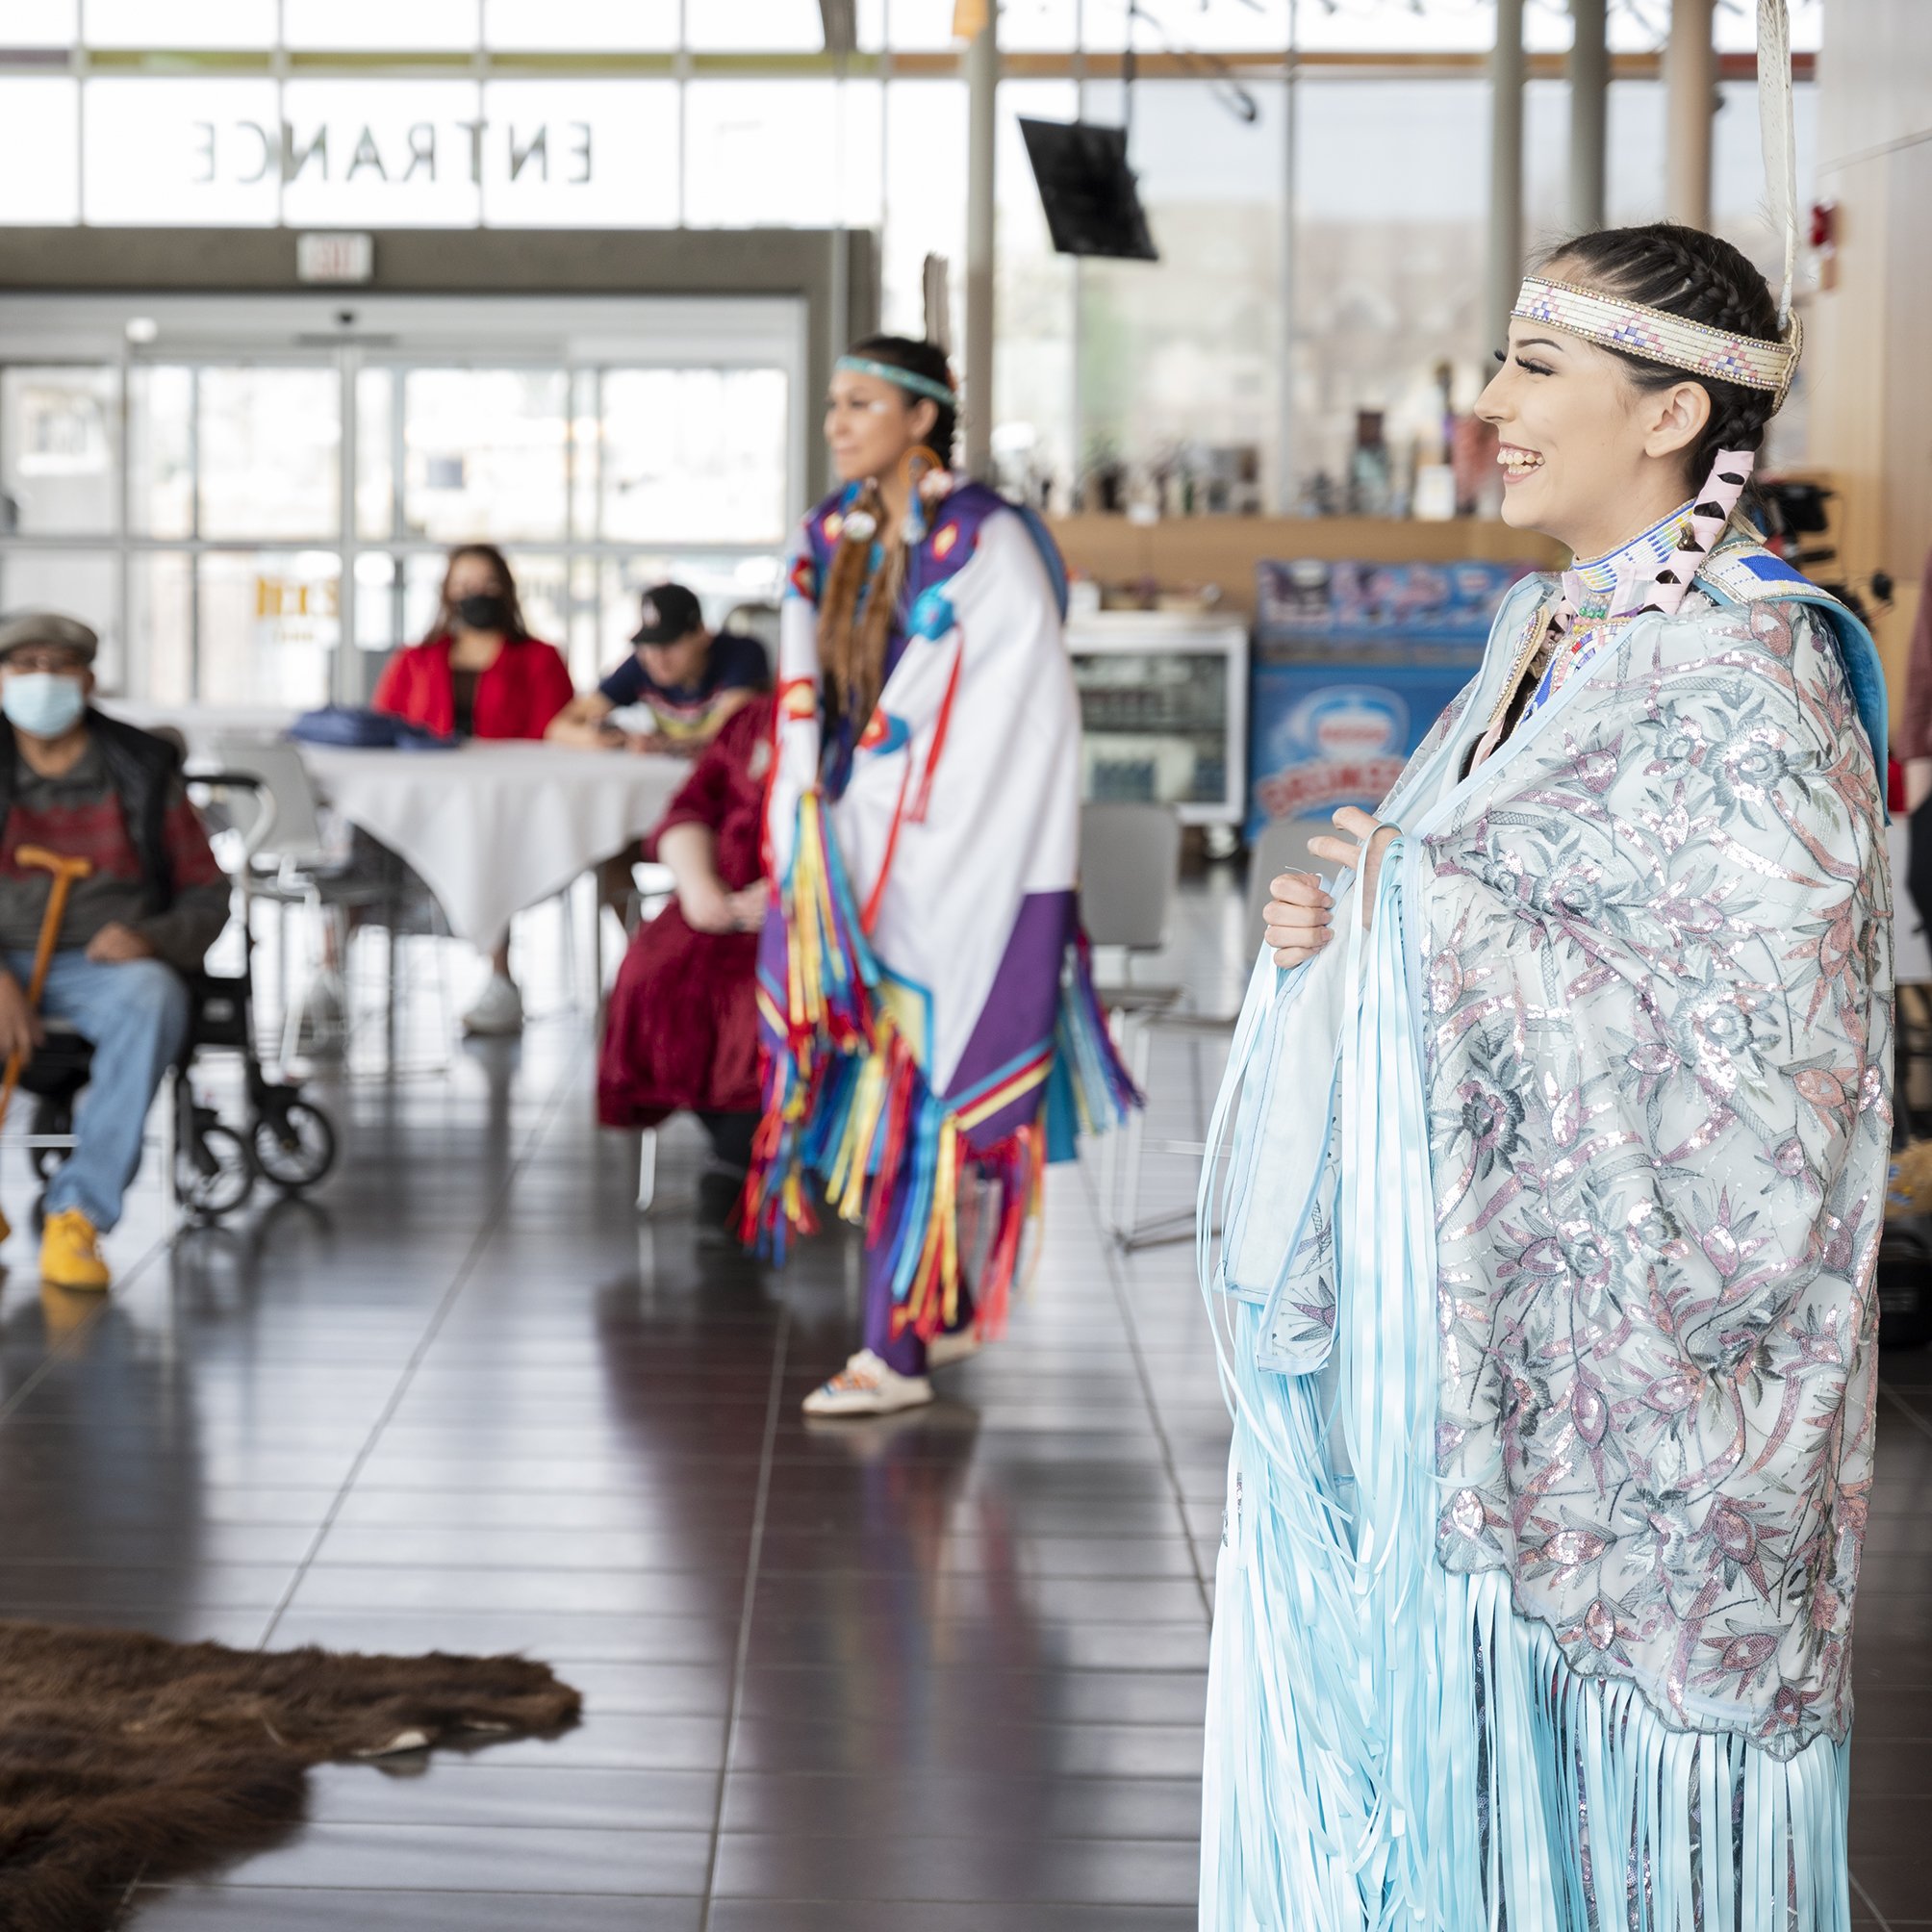 Blackfoot-Naming-Ceremony-Photo-APR25-02.jpg